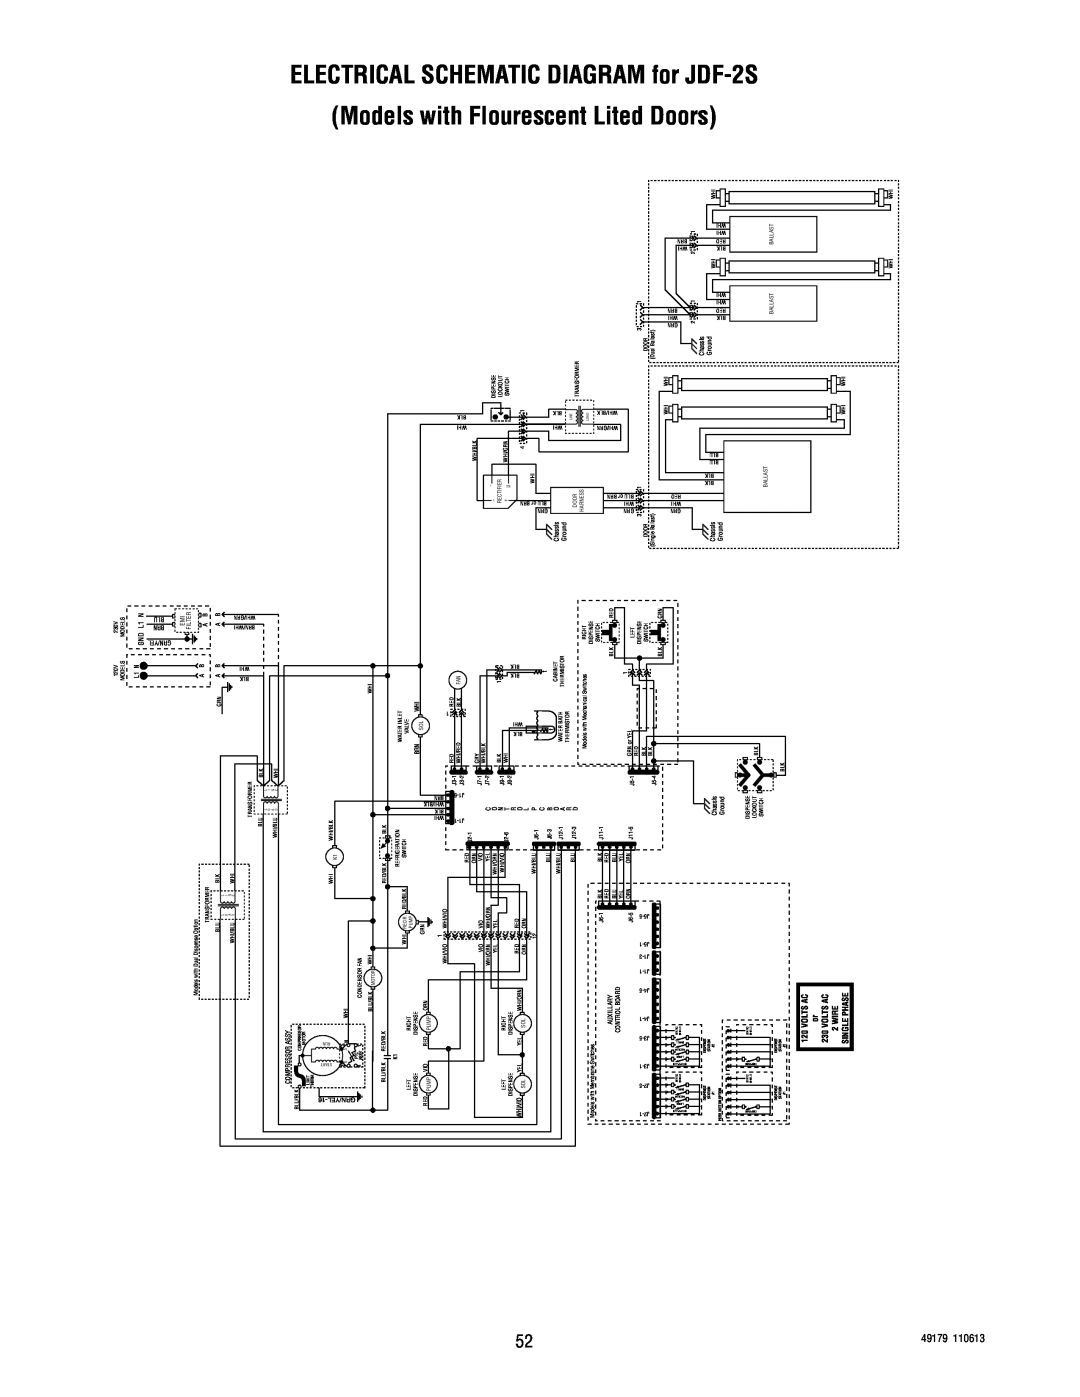 Bunn JDF-4SB ELECTRICAL SCHEMATIC DIAGRAM for JDF-2S, Models with Flourescent Lited Doors, Schematic Wiring, 49179, 110613 